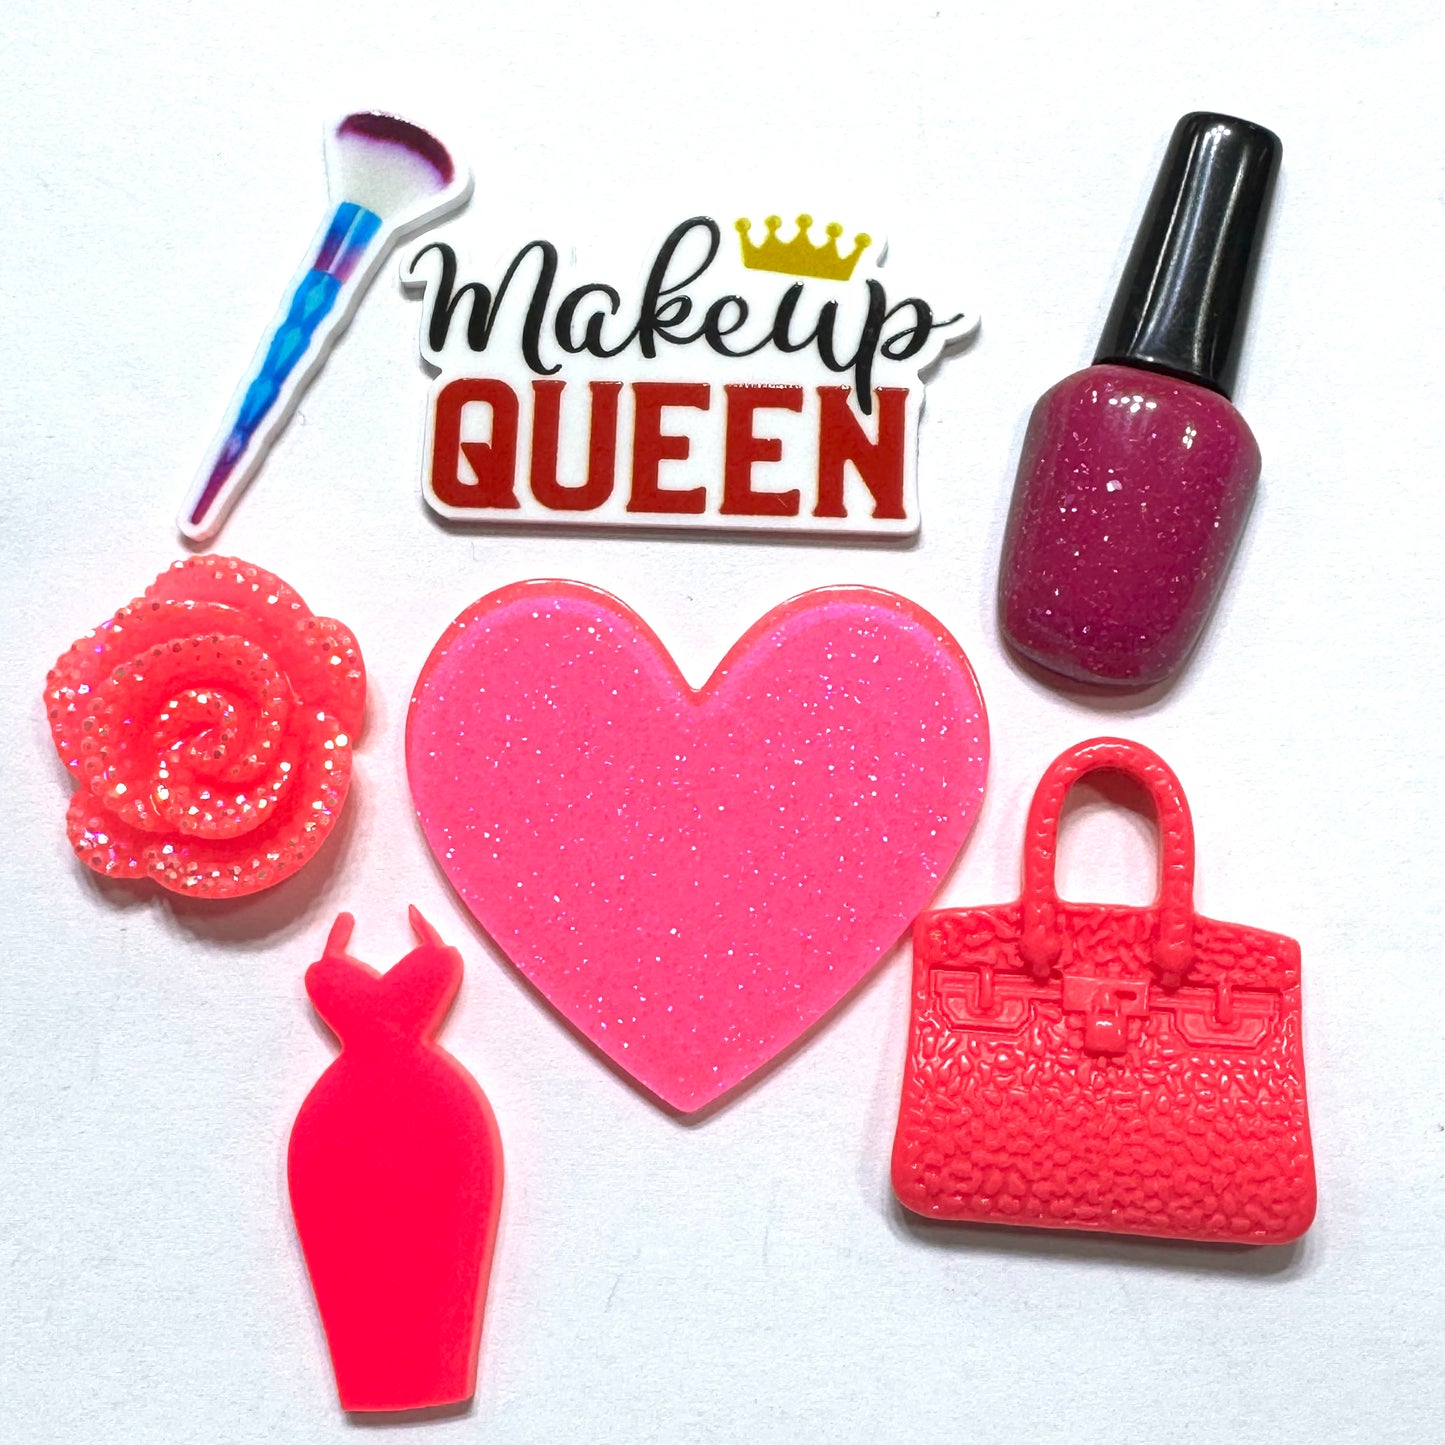 Make up Queen 3D Bundle Kit